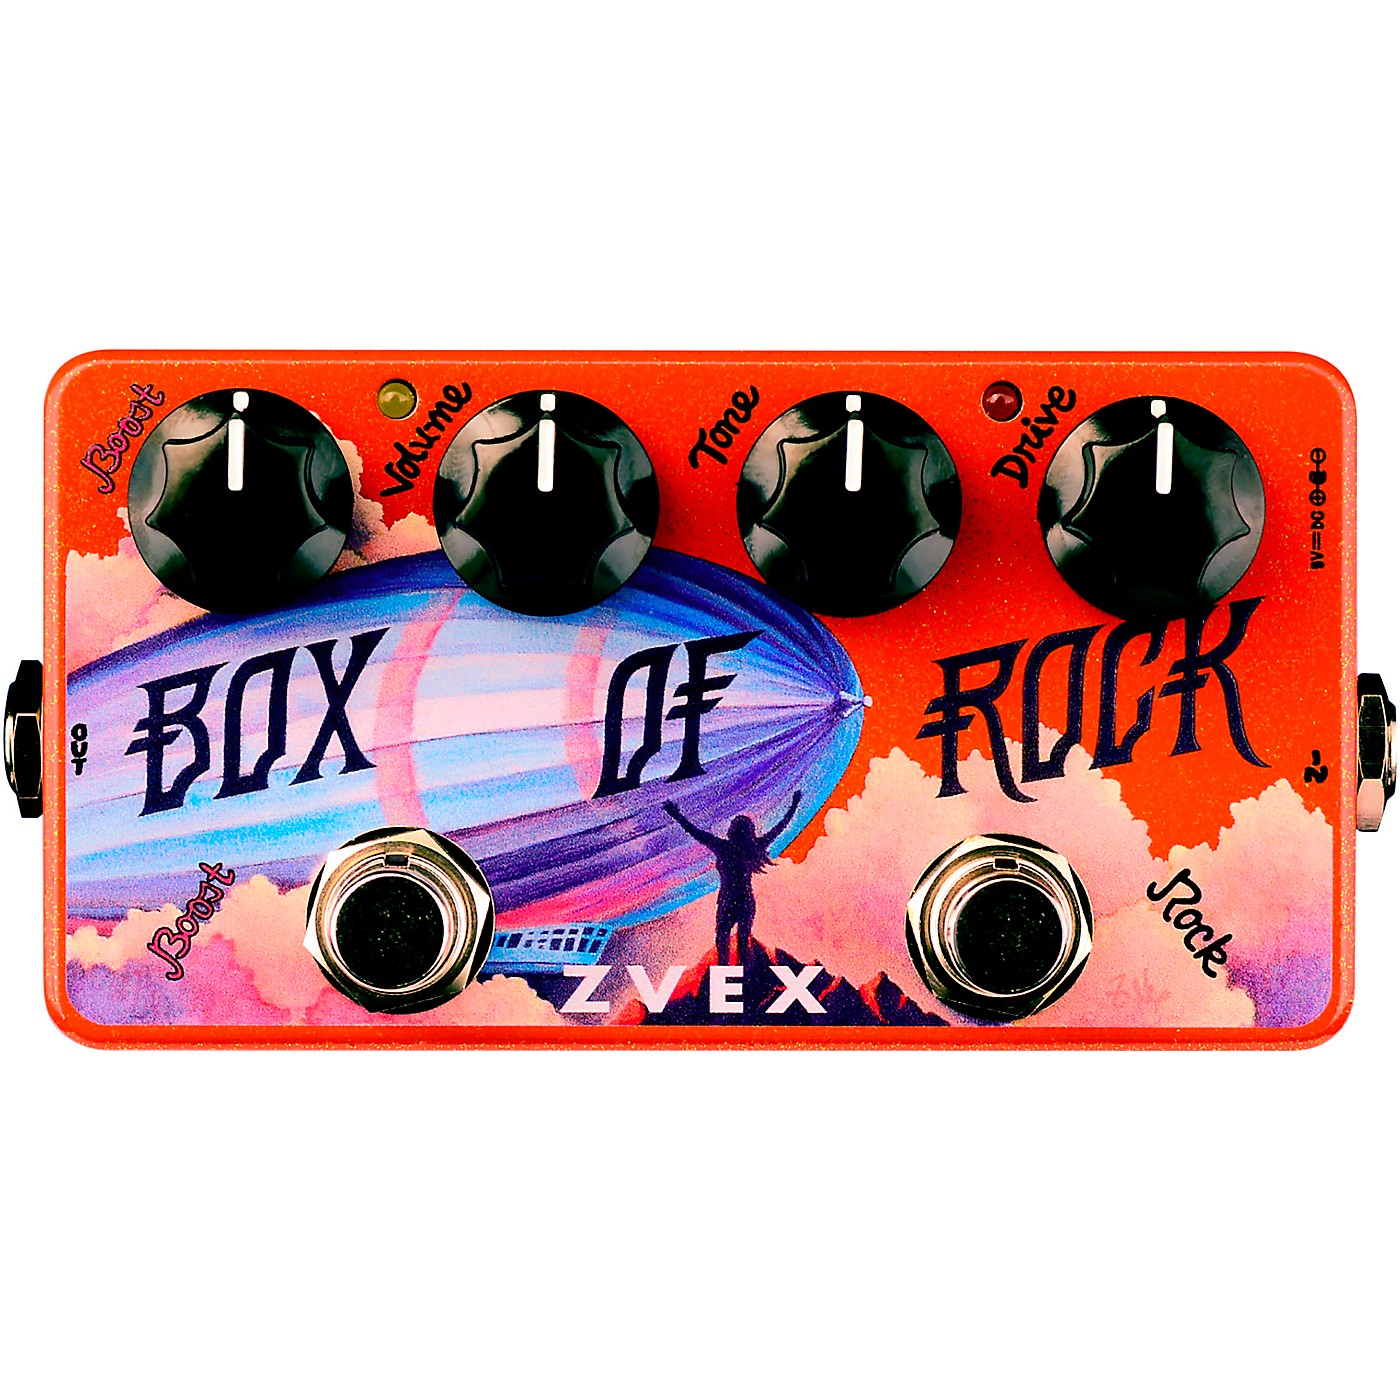 Zvex Box of Rock Distortion Guitar Effects Pedal thumbnail